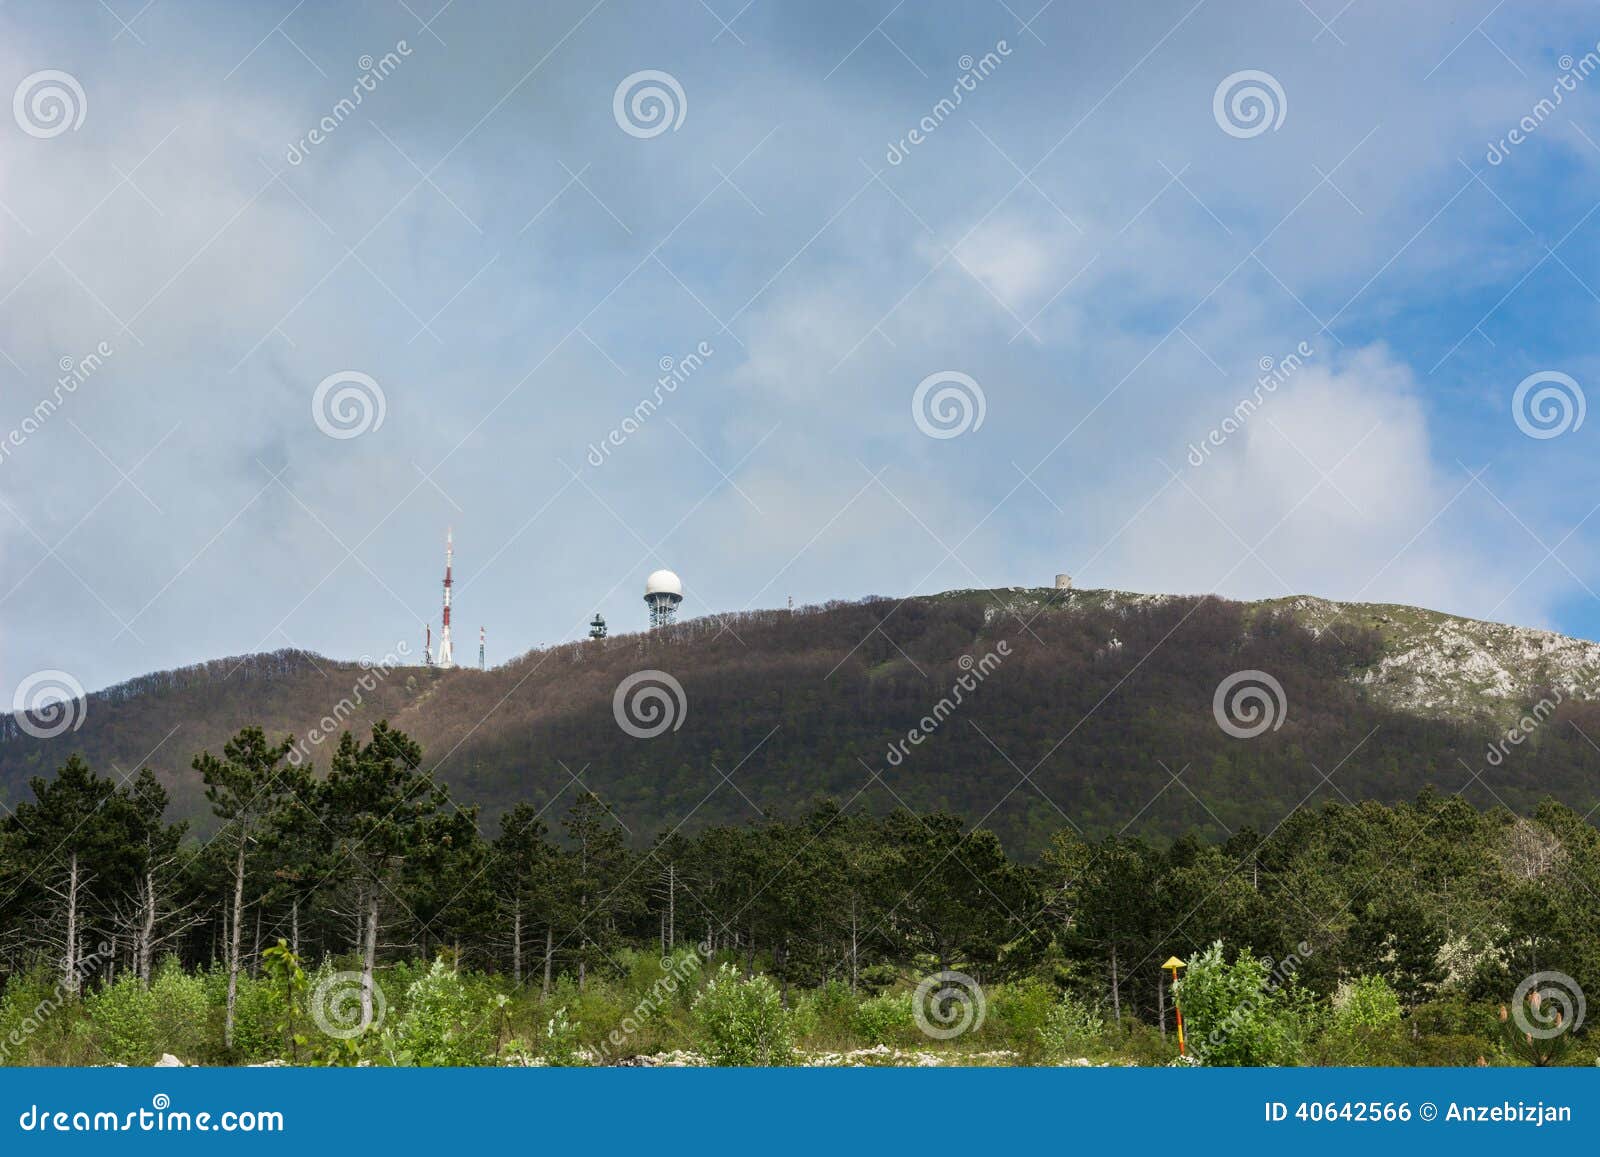 radio antenna and radar on top of a mountain